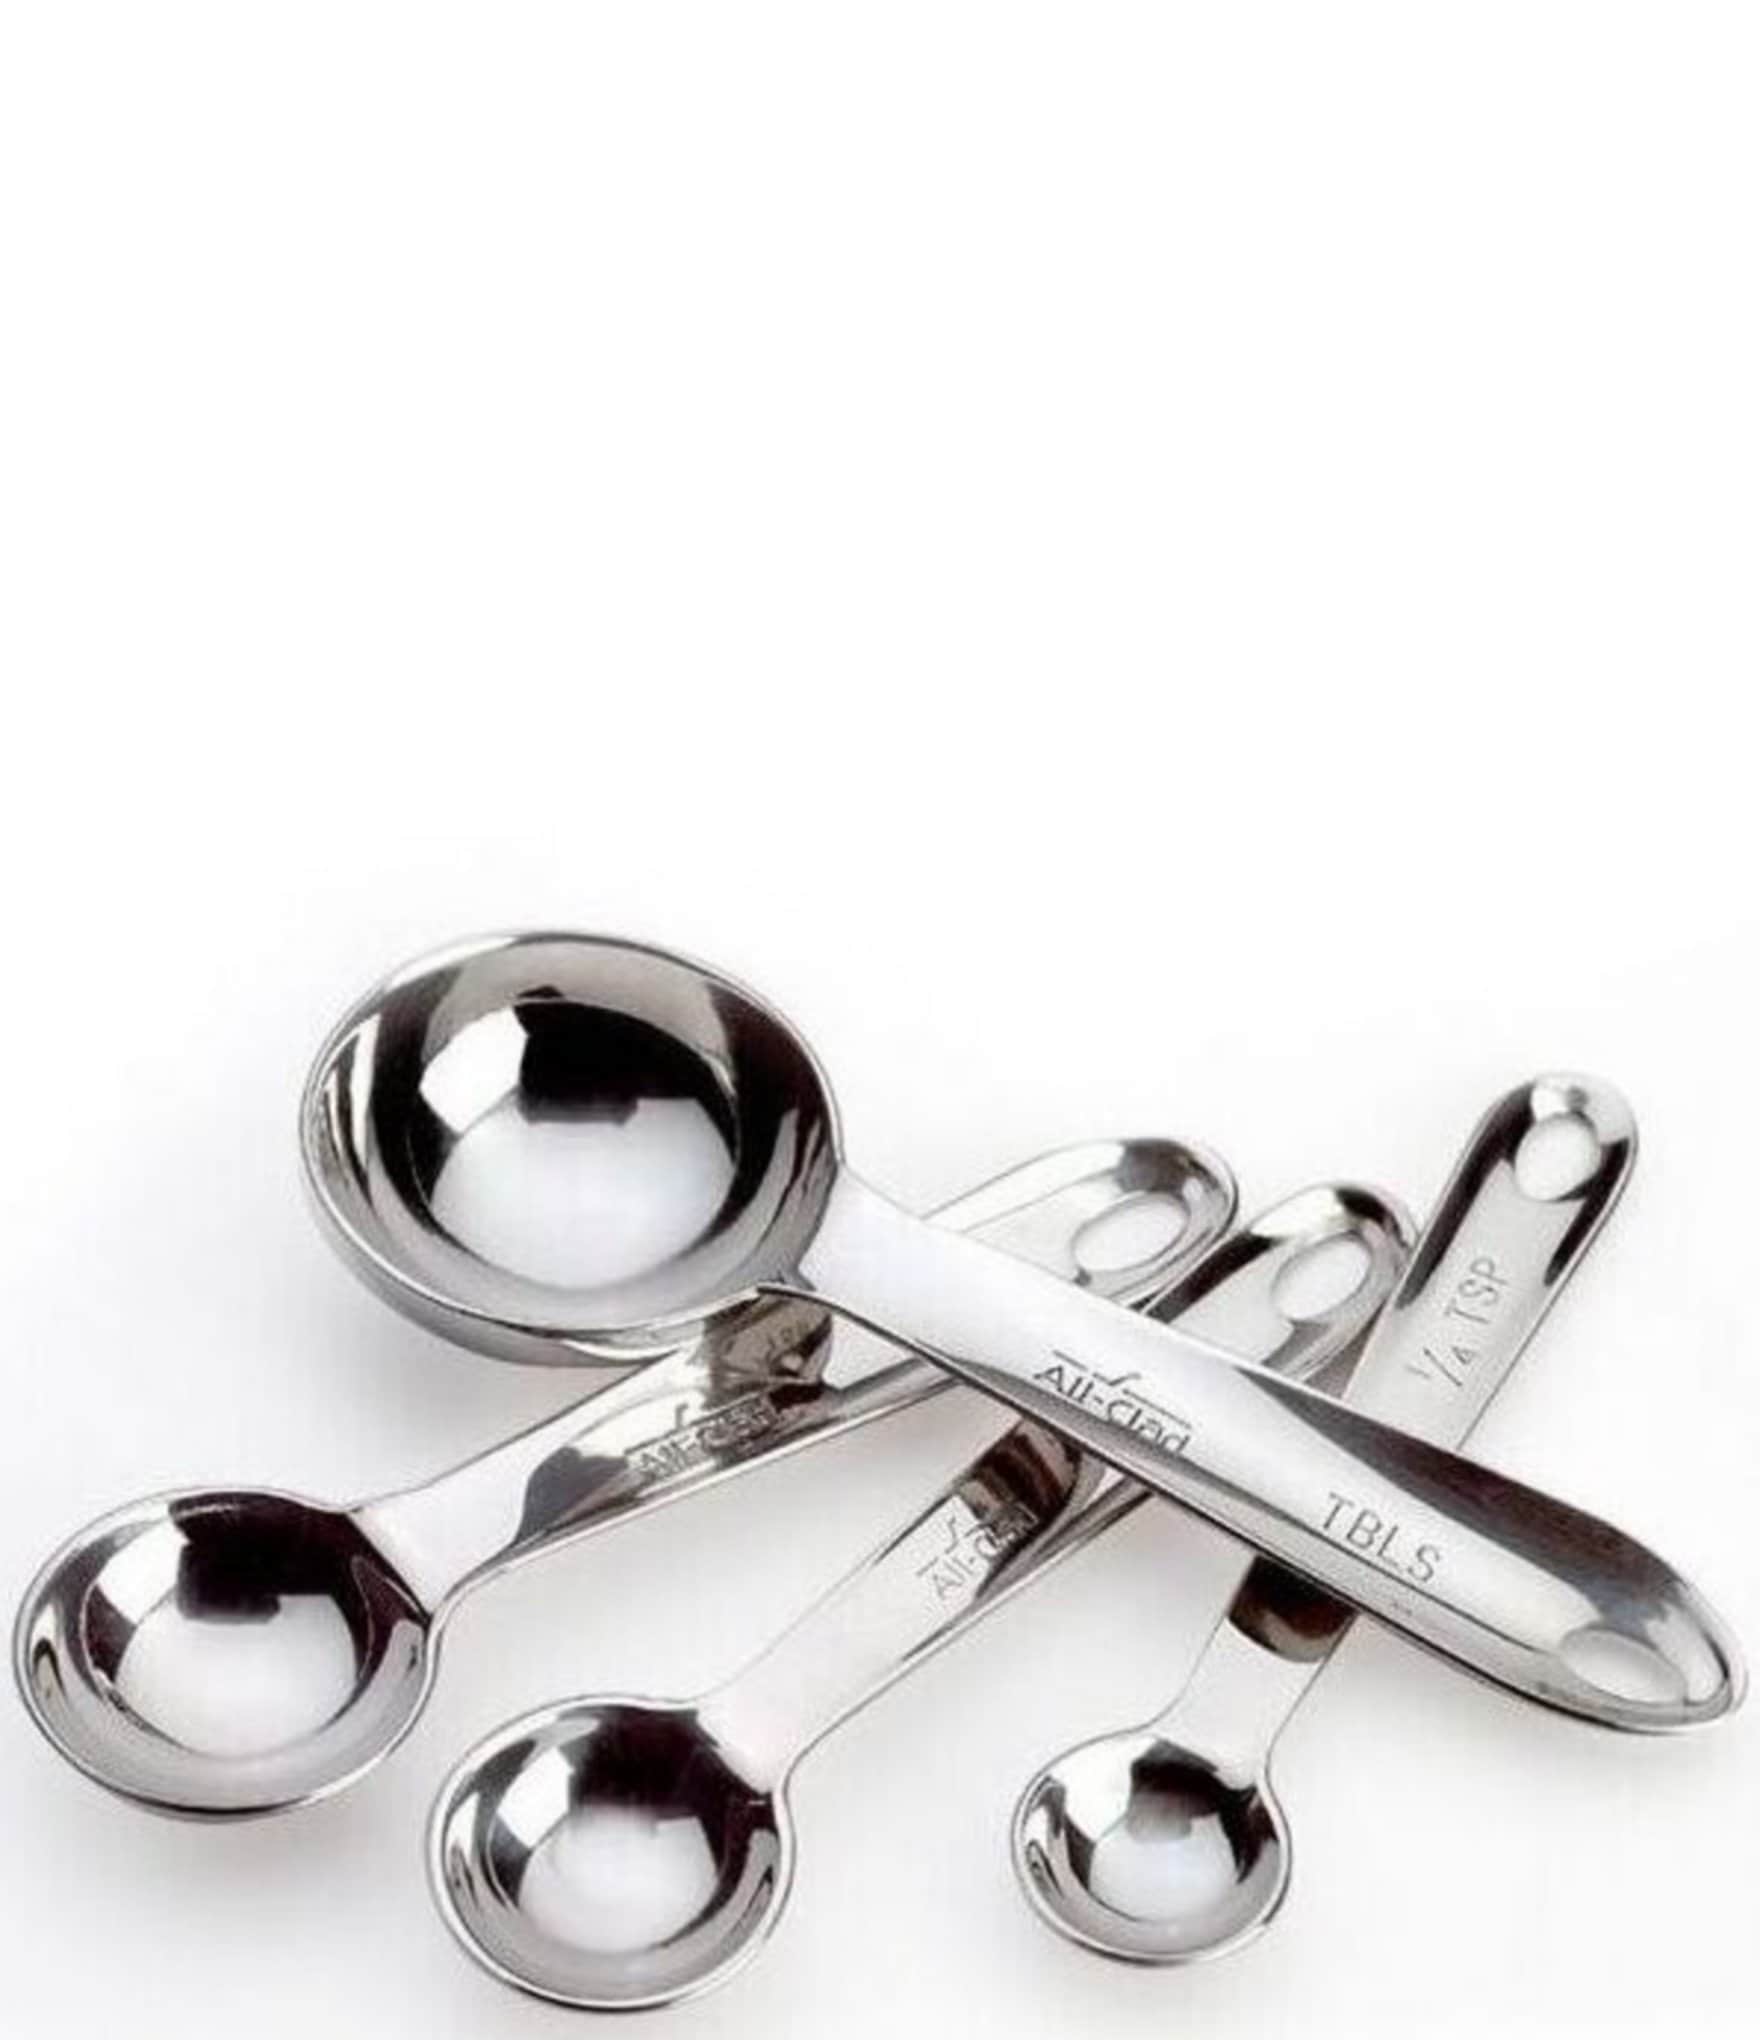 Good Grips Measuring Spoon Set, Stainless Steel, 4 Piece - 1 set